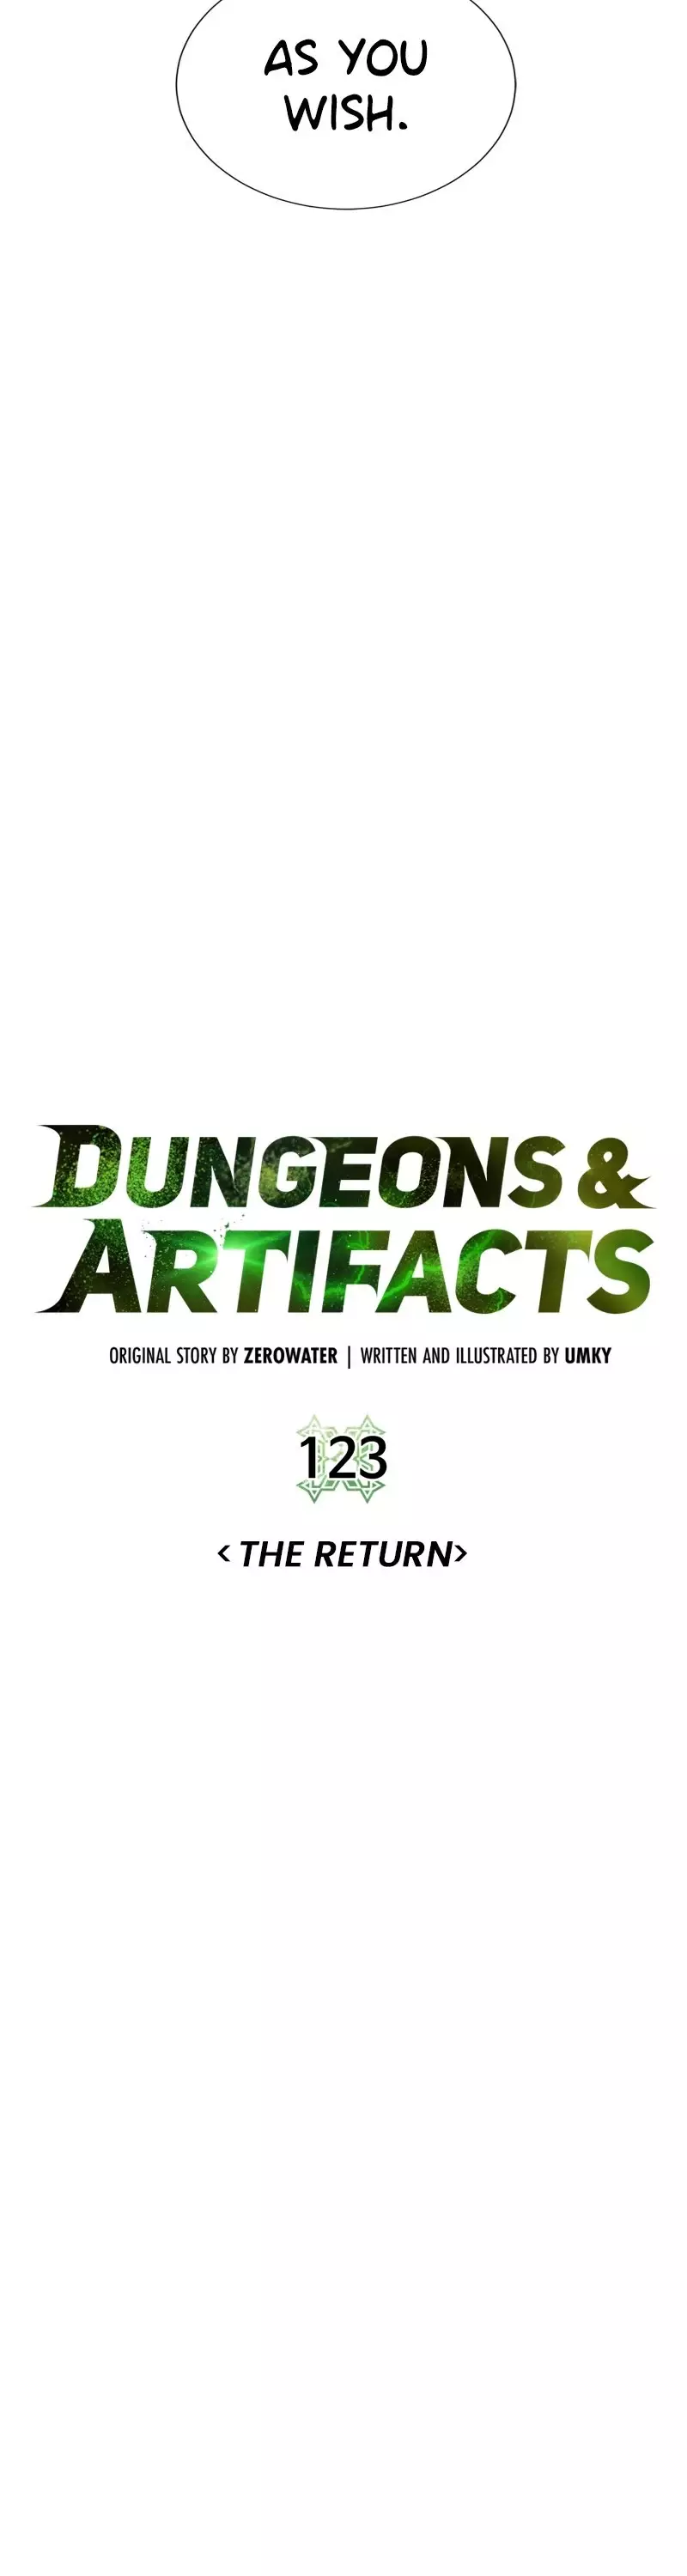 Dungeons & Artifacts - 123 page 11-3851bdc4